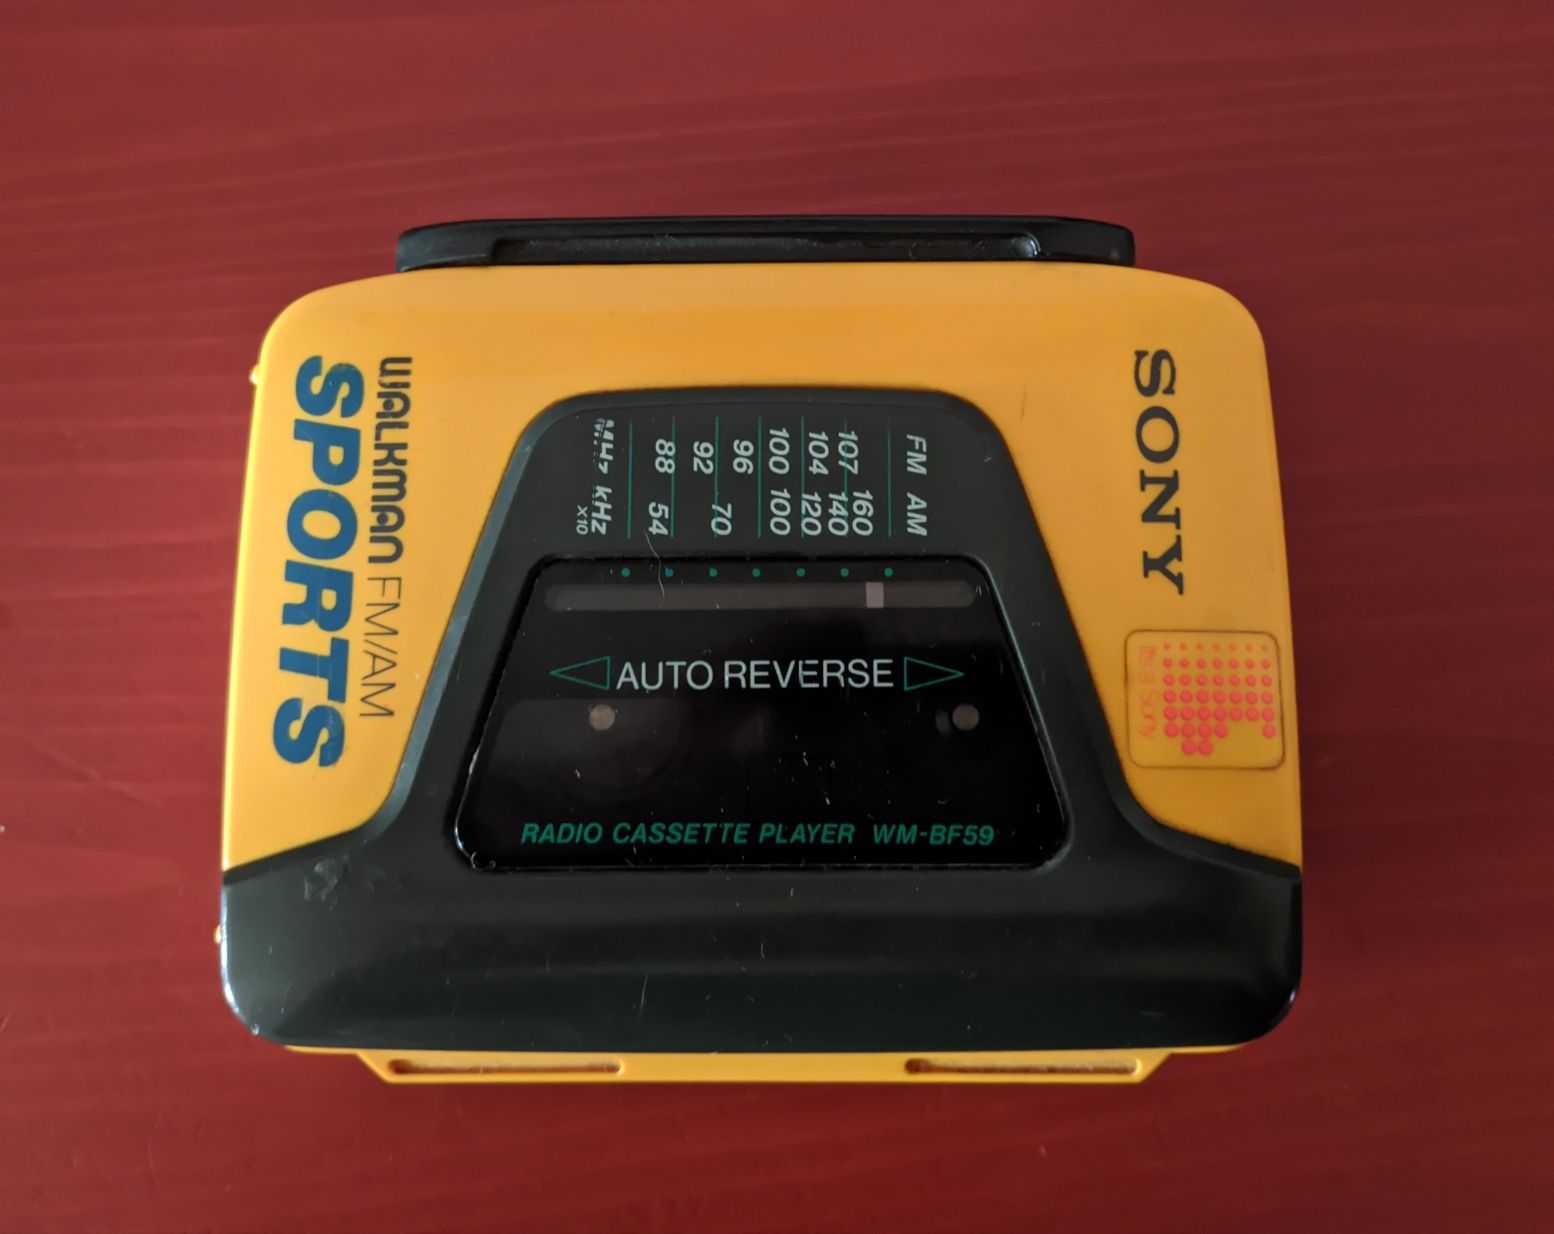 Vintage Sony Sports walkman radio cassette tape player WM-BF59